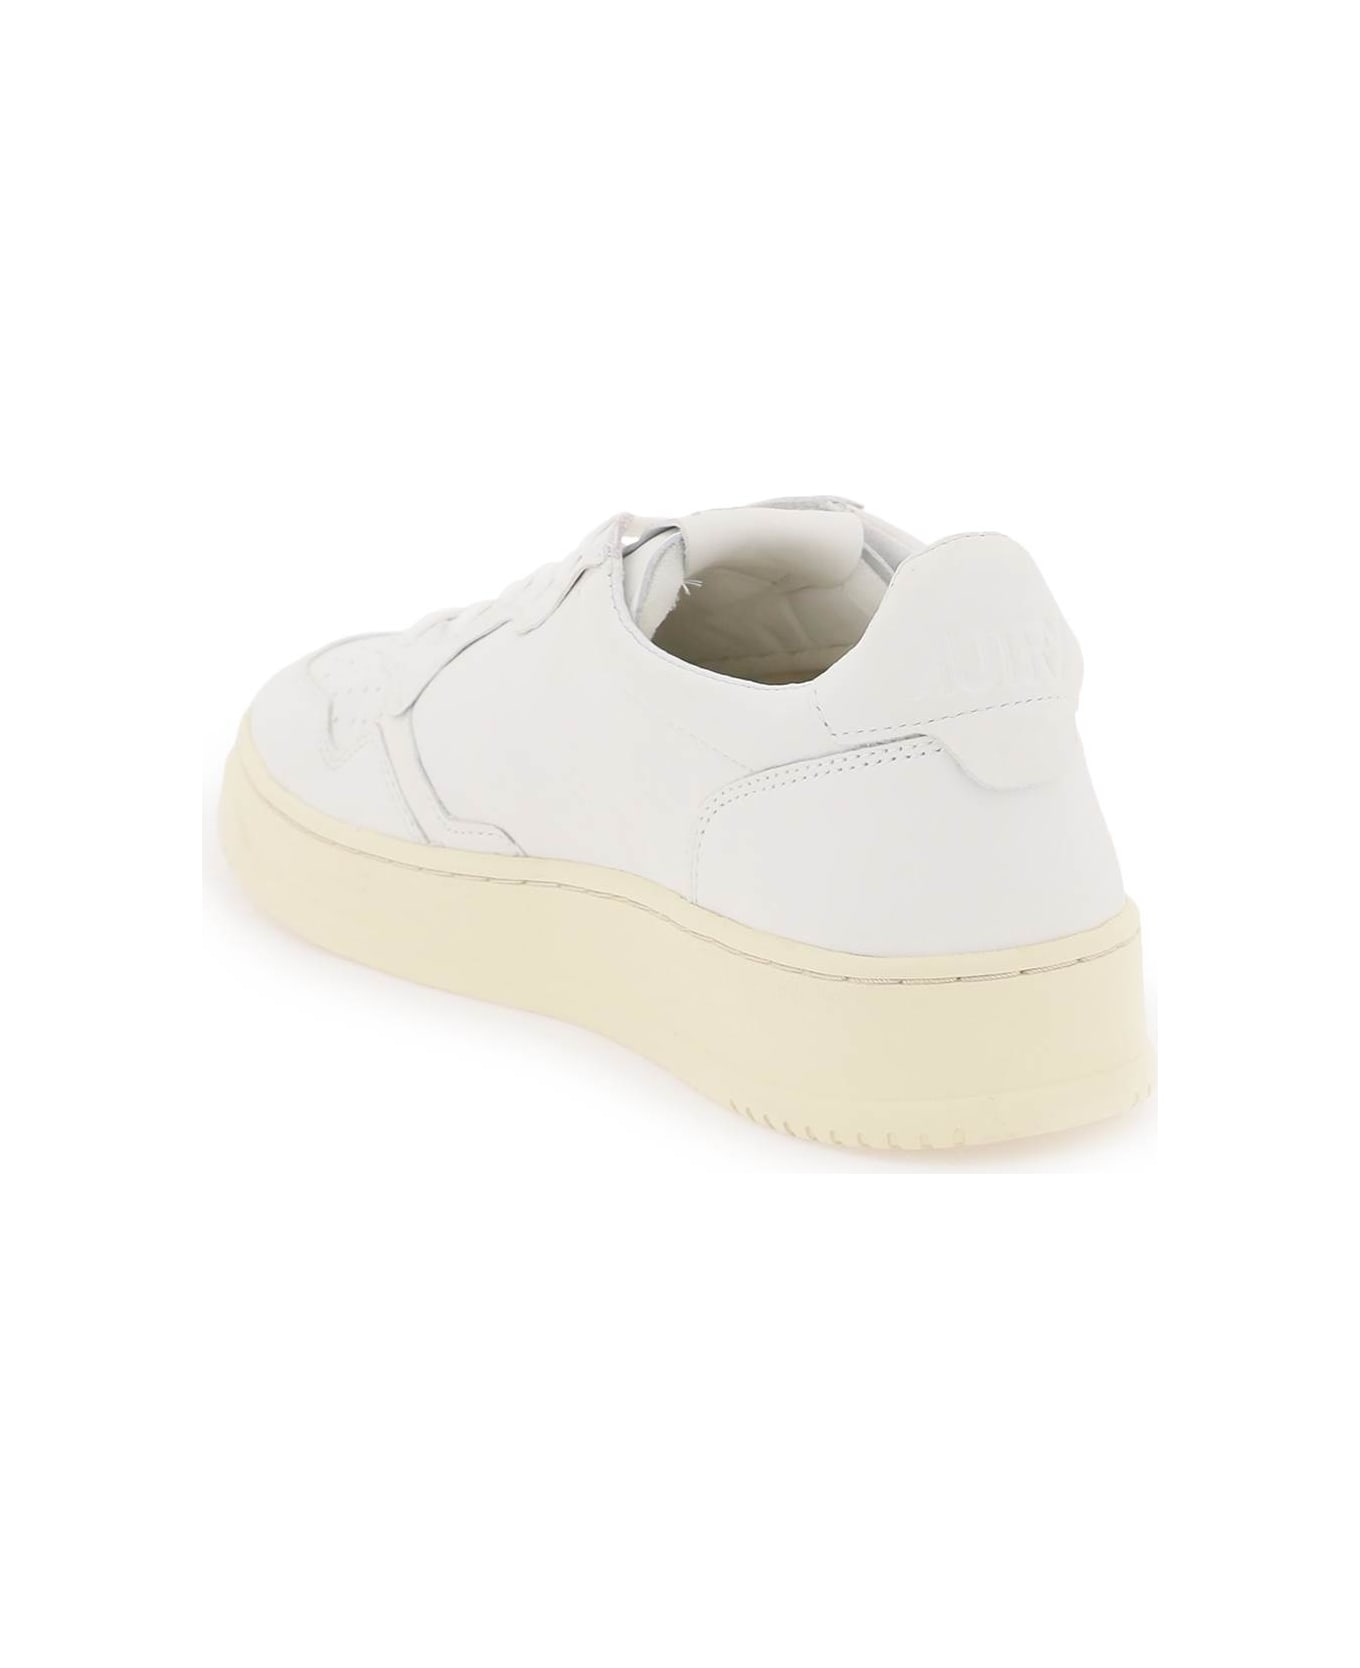 Autry Sneaker - White